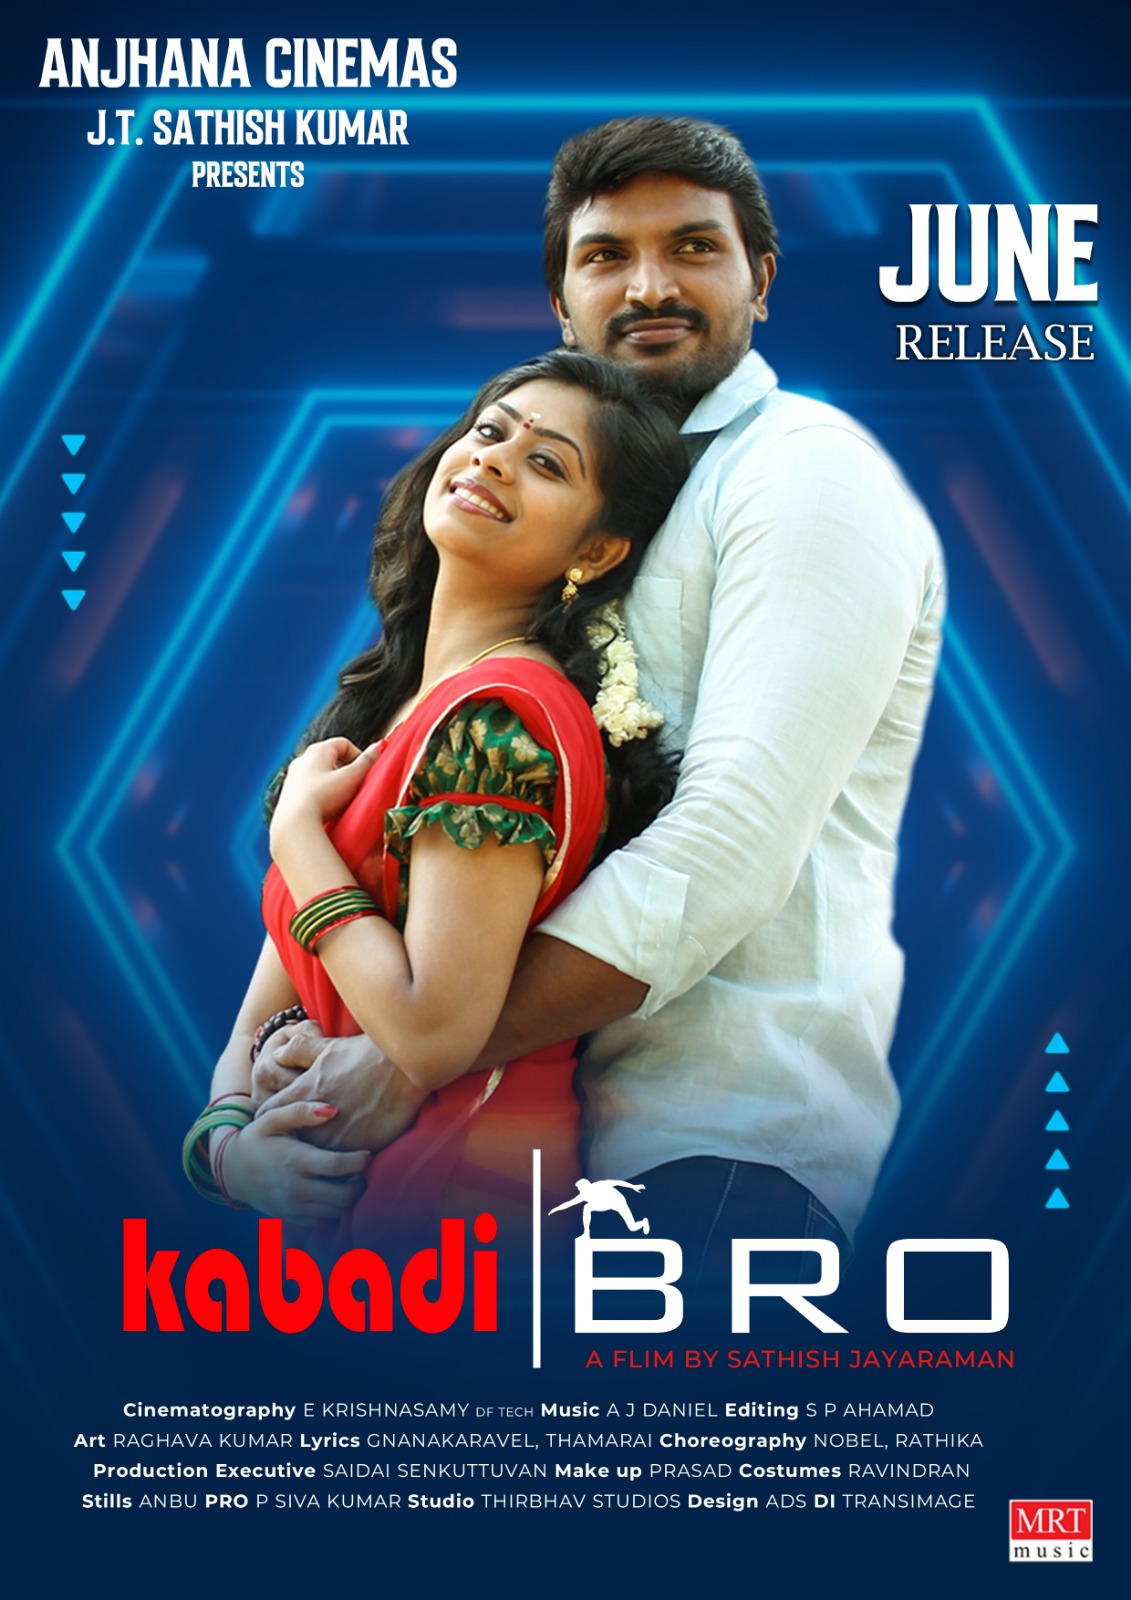 Kabadi Bro: A story of a Kabaddi hero will be releasing June in theatres